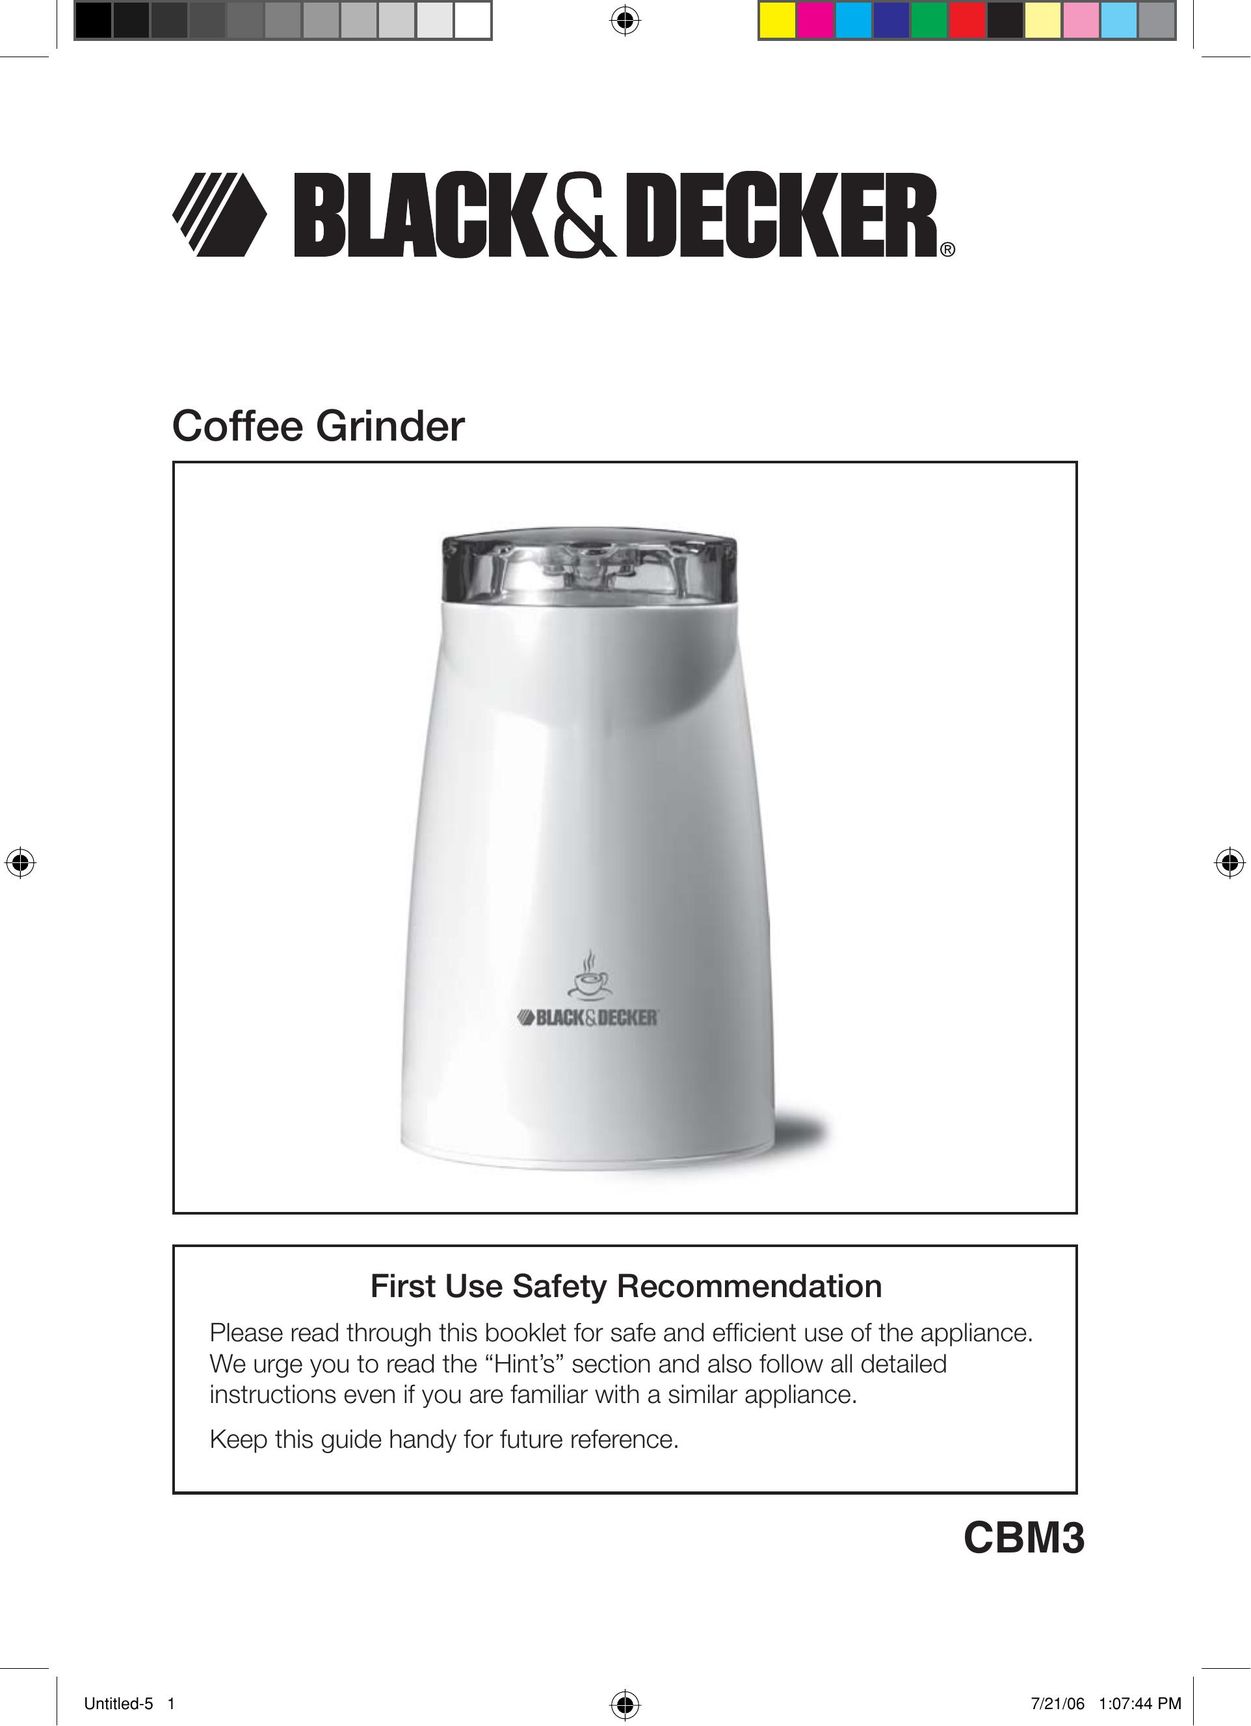 Black & Decker CBM3 Coffee Grinder User Manual